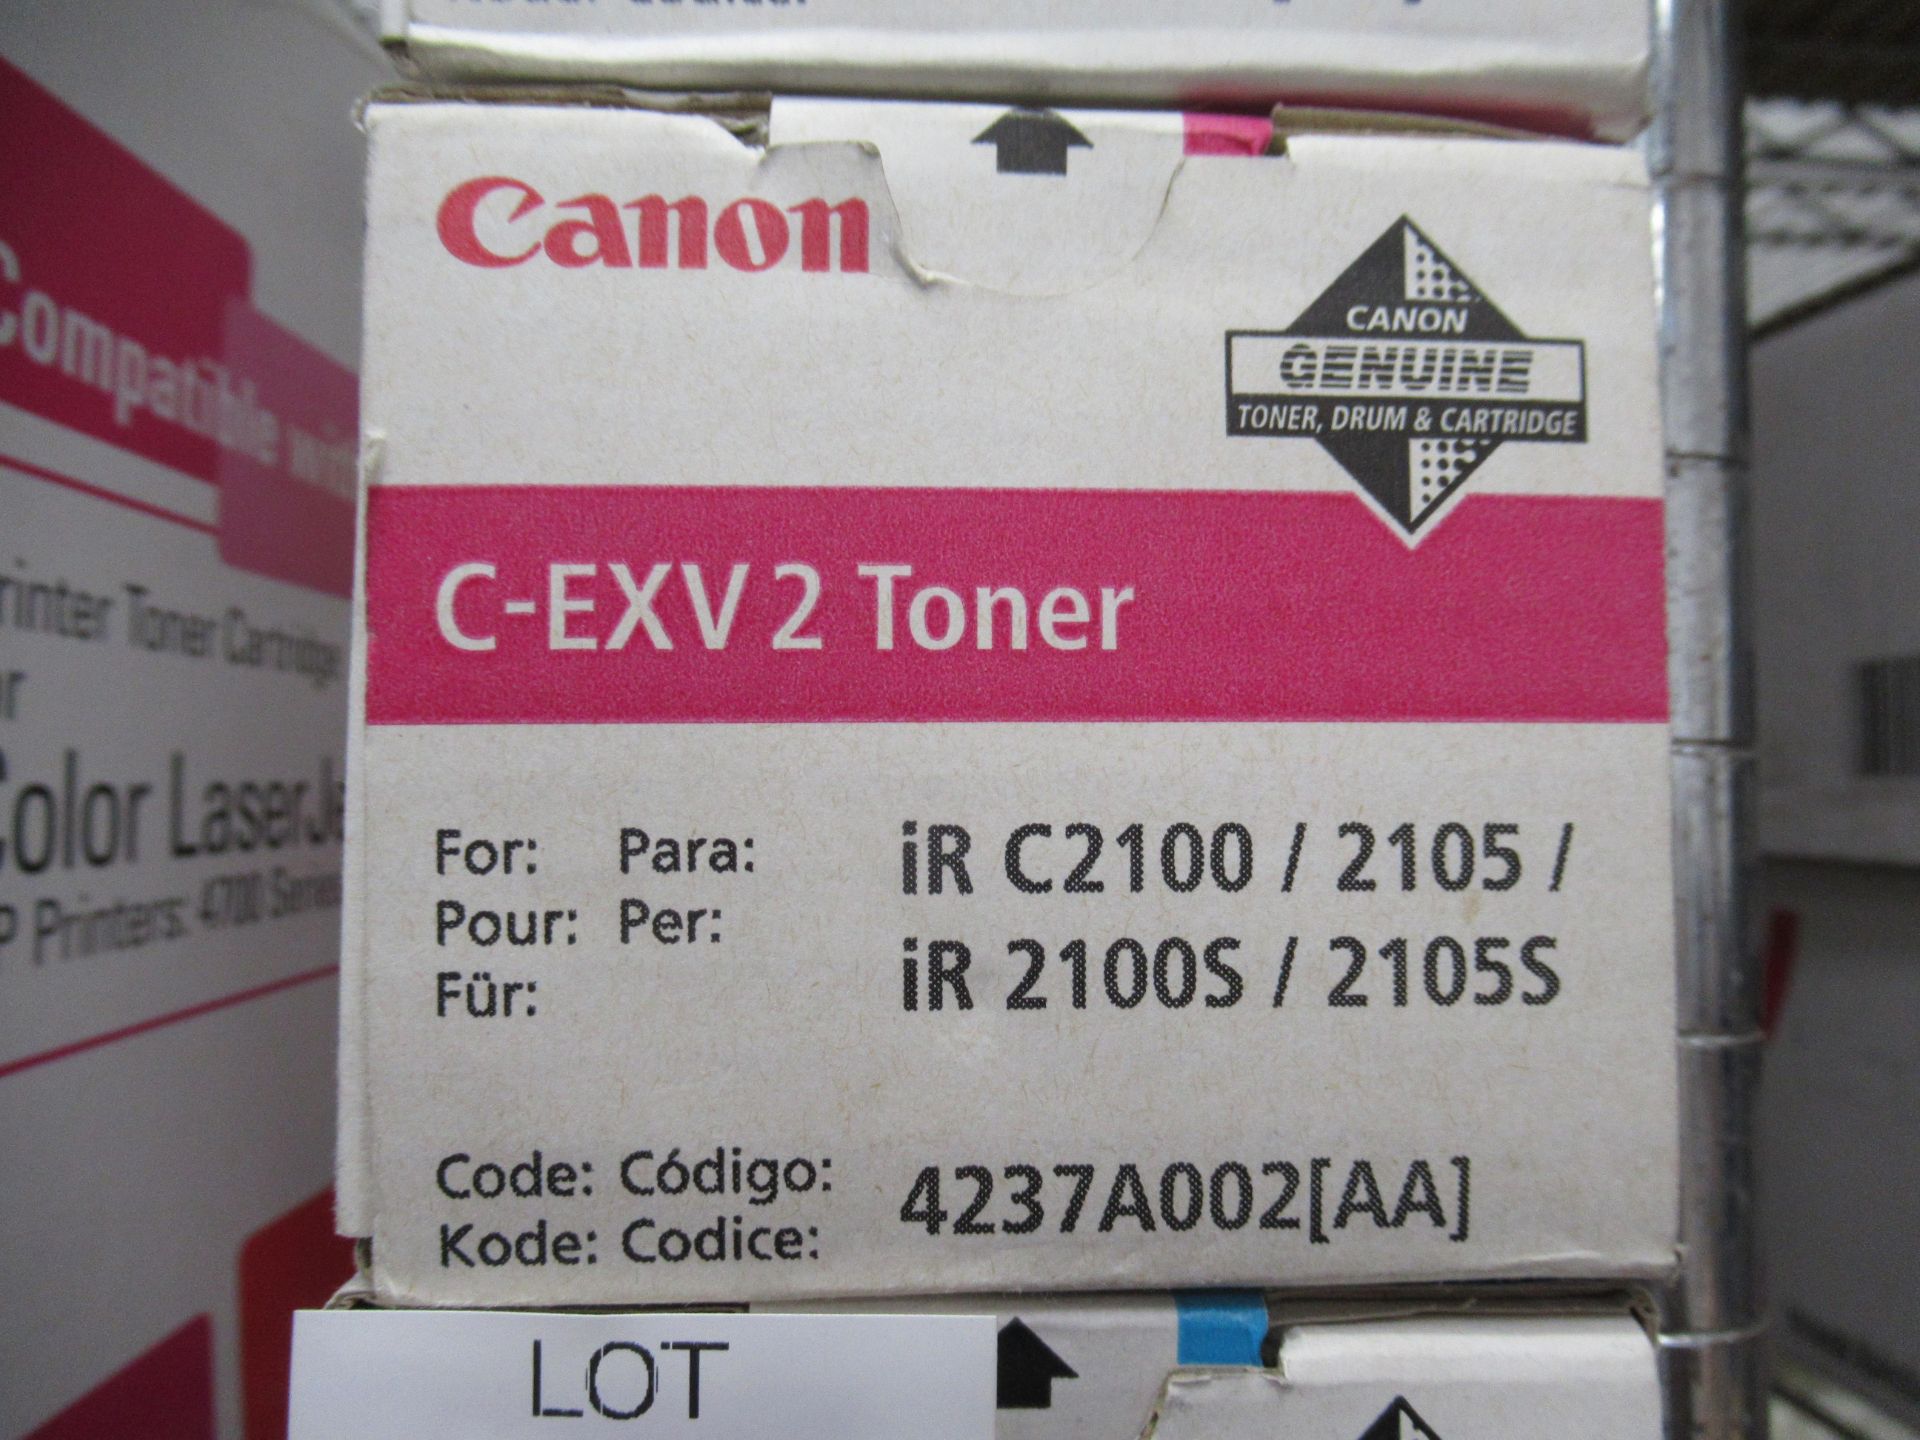 4x Canon C-EXV2 Toner Cartridges - Image 2 of 4